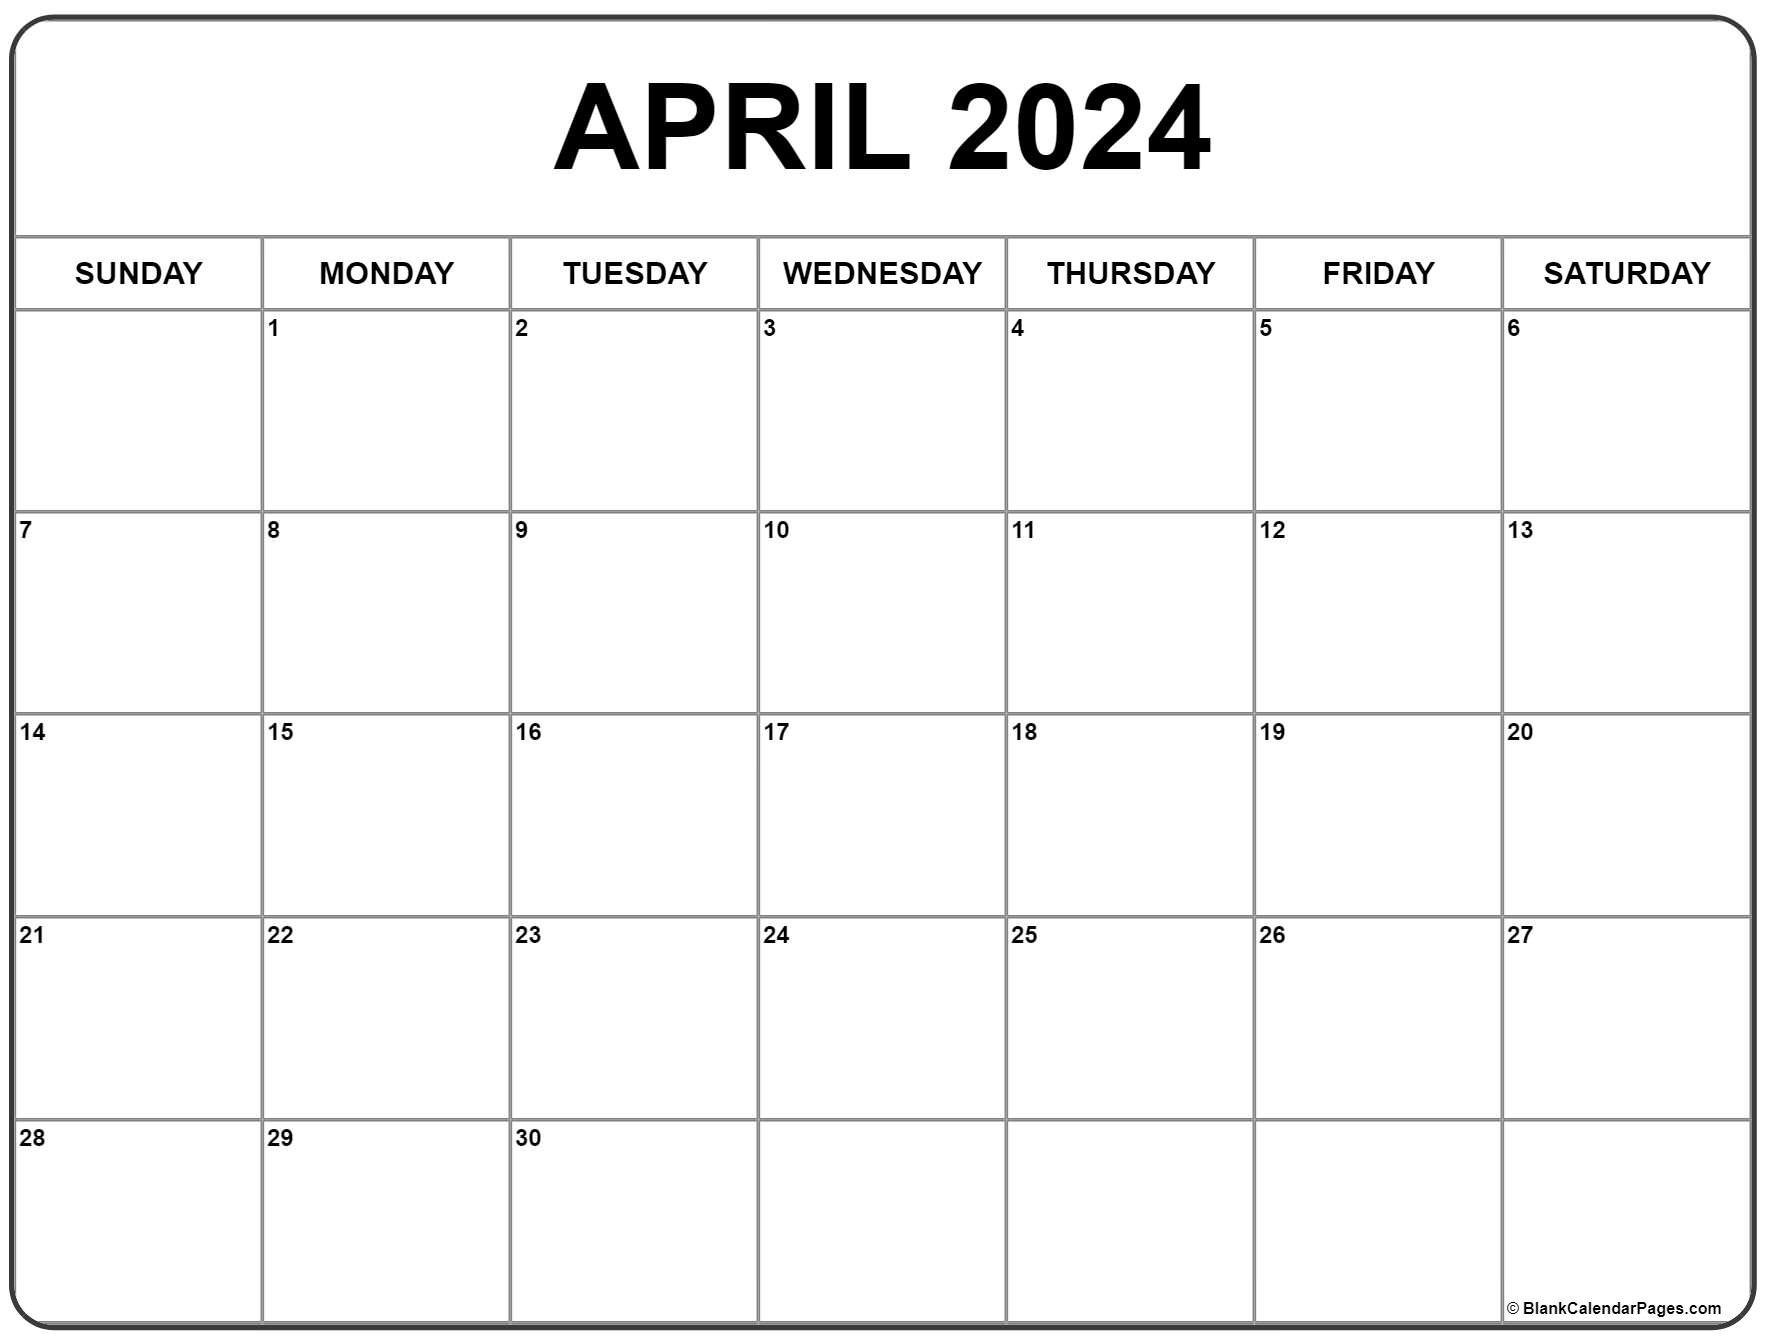 April 2024 Calendar | Free Printable Calendar in Google Calendar - April 2024